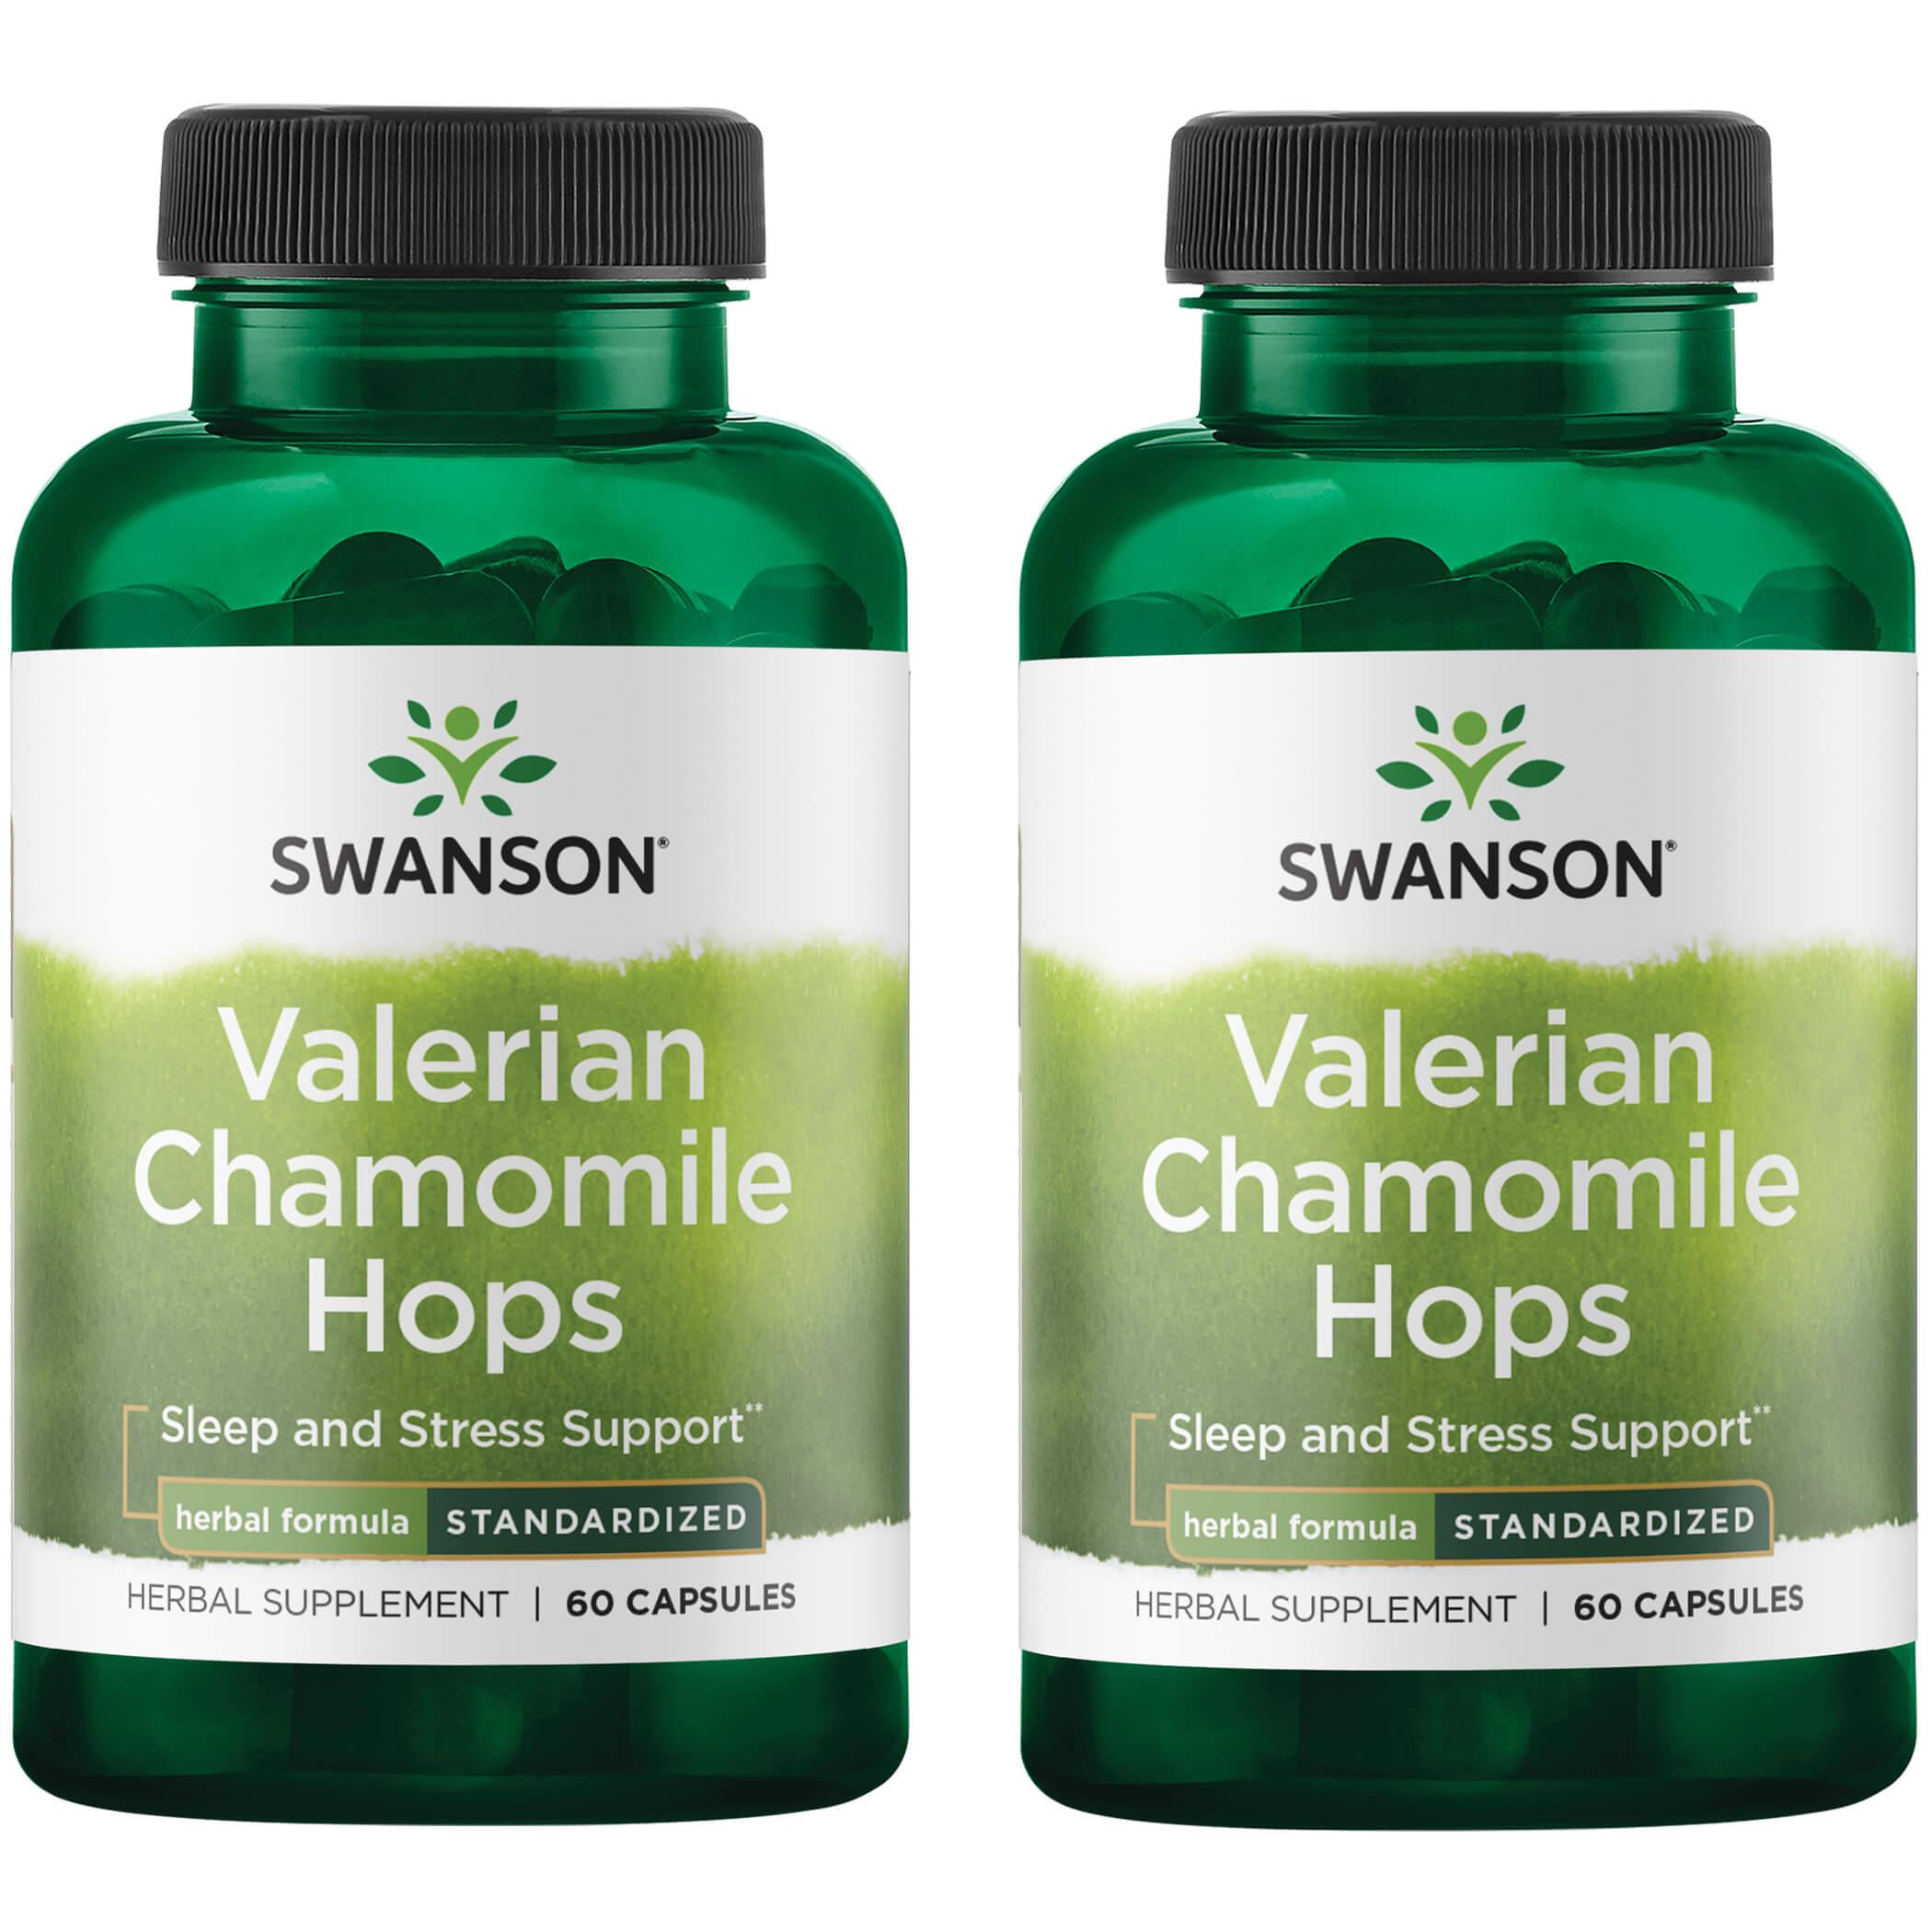 Swanson Superior Herbs Valerian Chamomile Hops - Standardized 2 Pack Vitamin 60 Caps